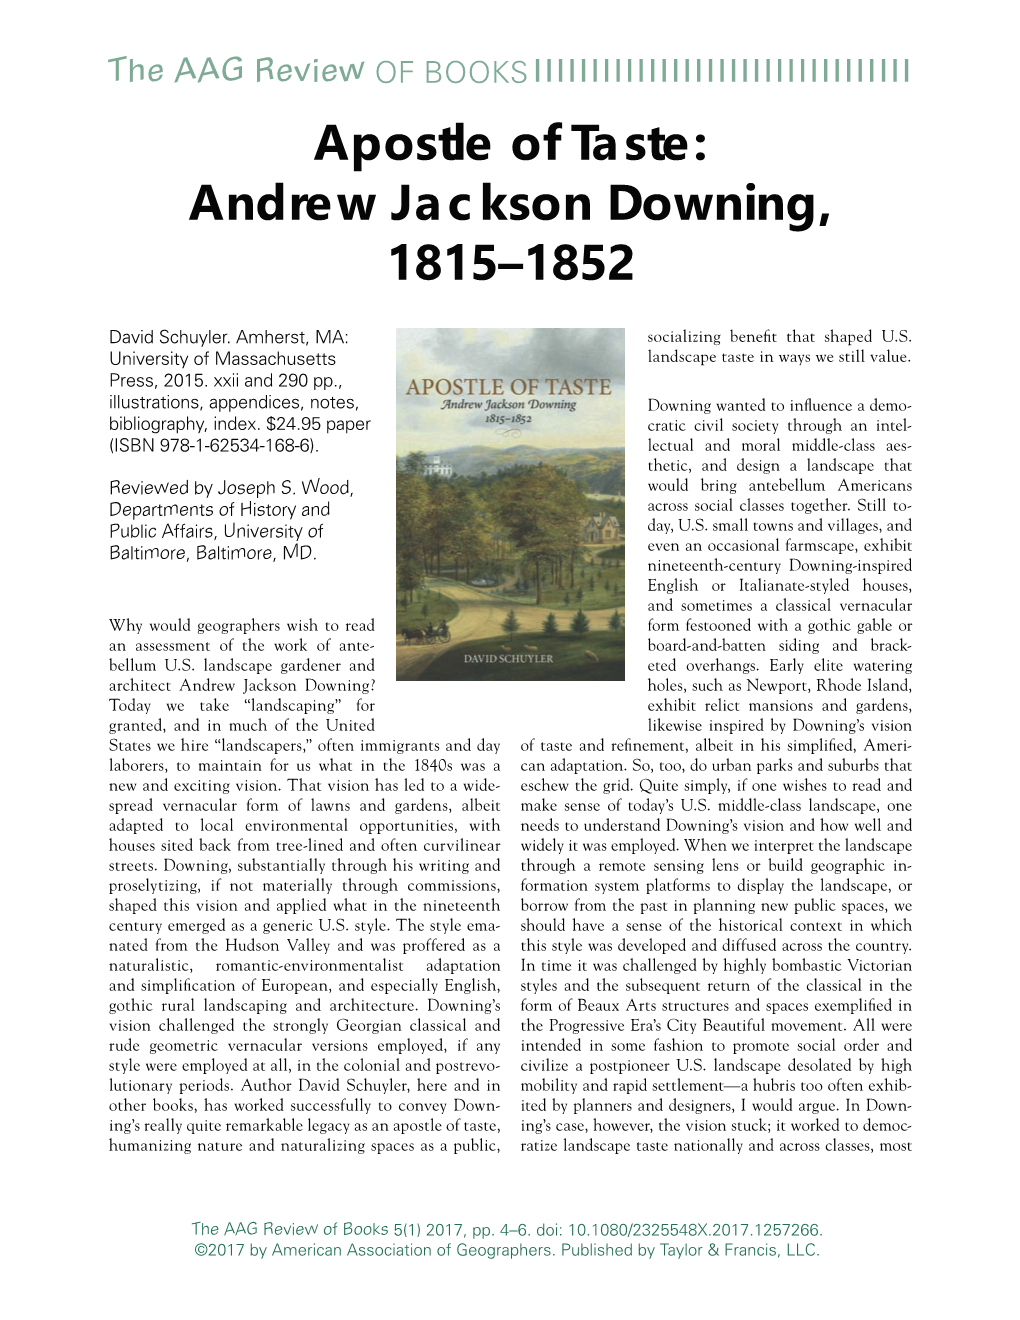 Andrew Jackson Downing, 1815–1852